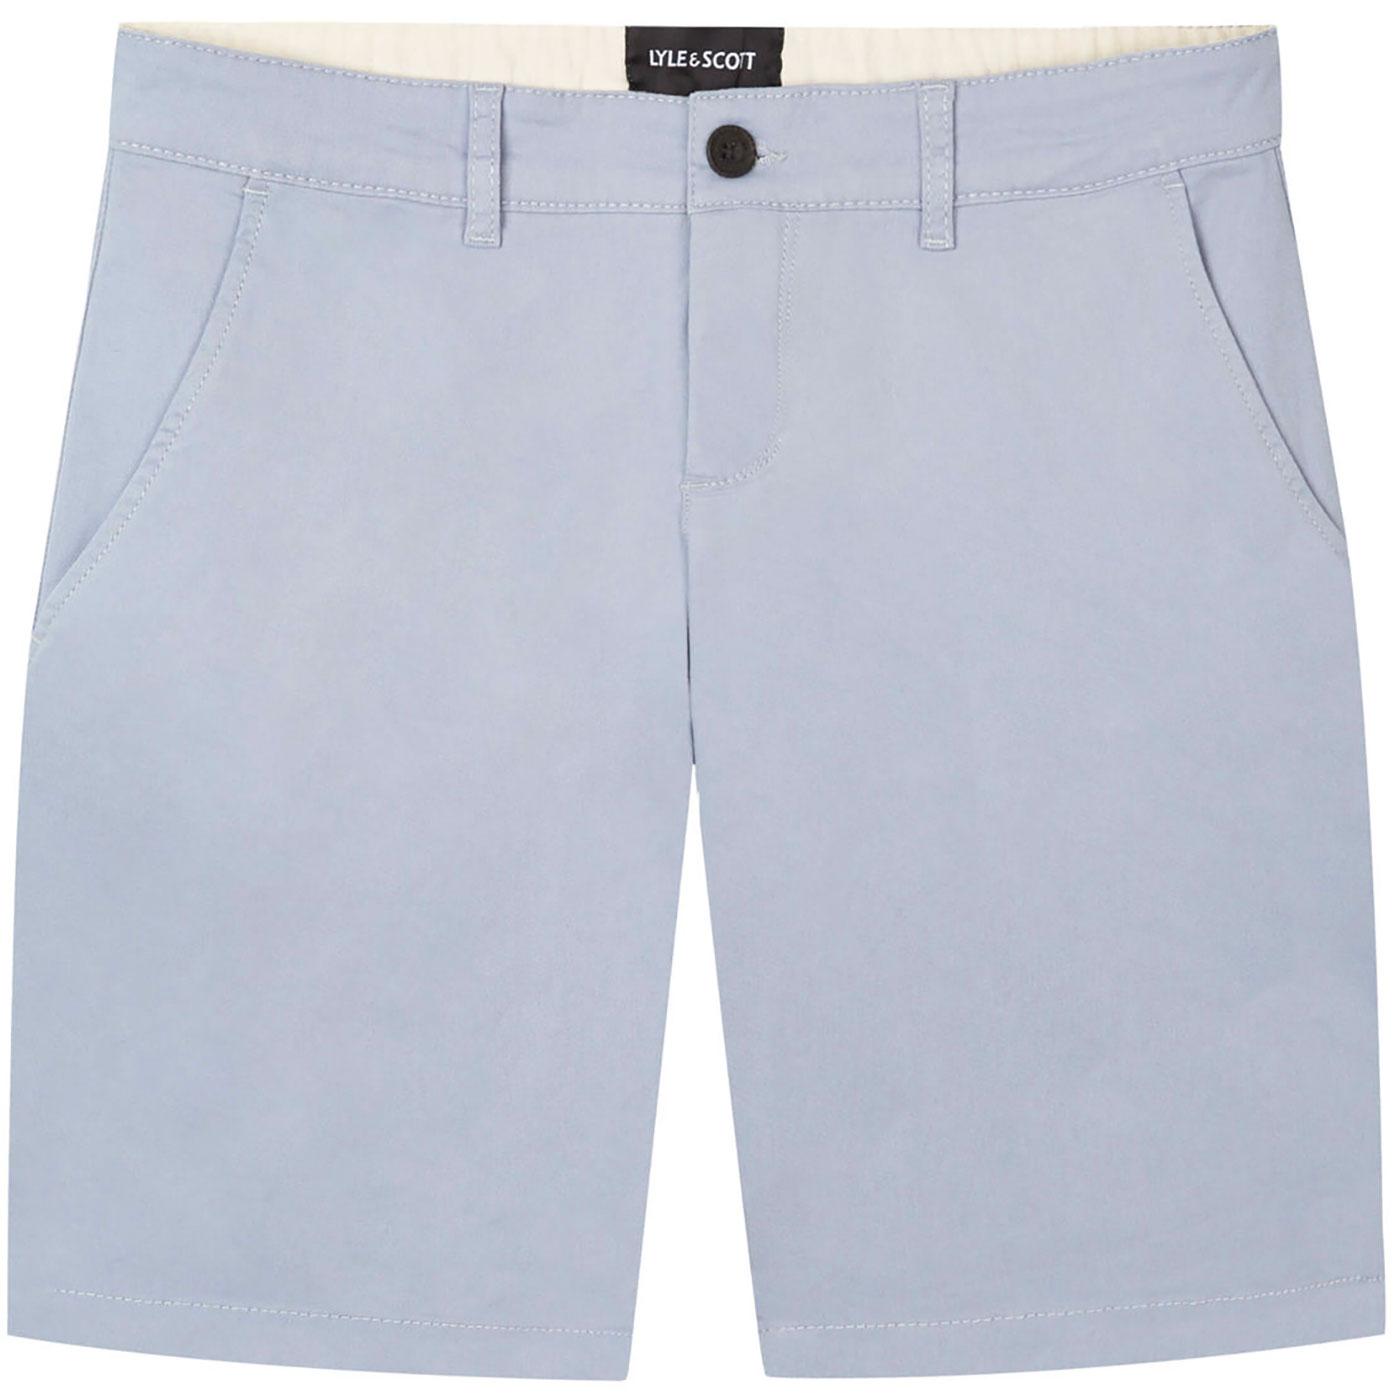 LYLE & SCOTT Men's Retro Chino Shorts (Cloud Blue)